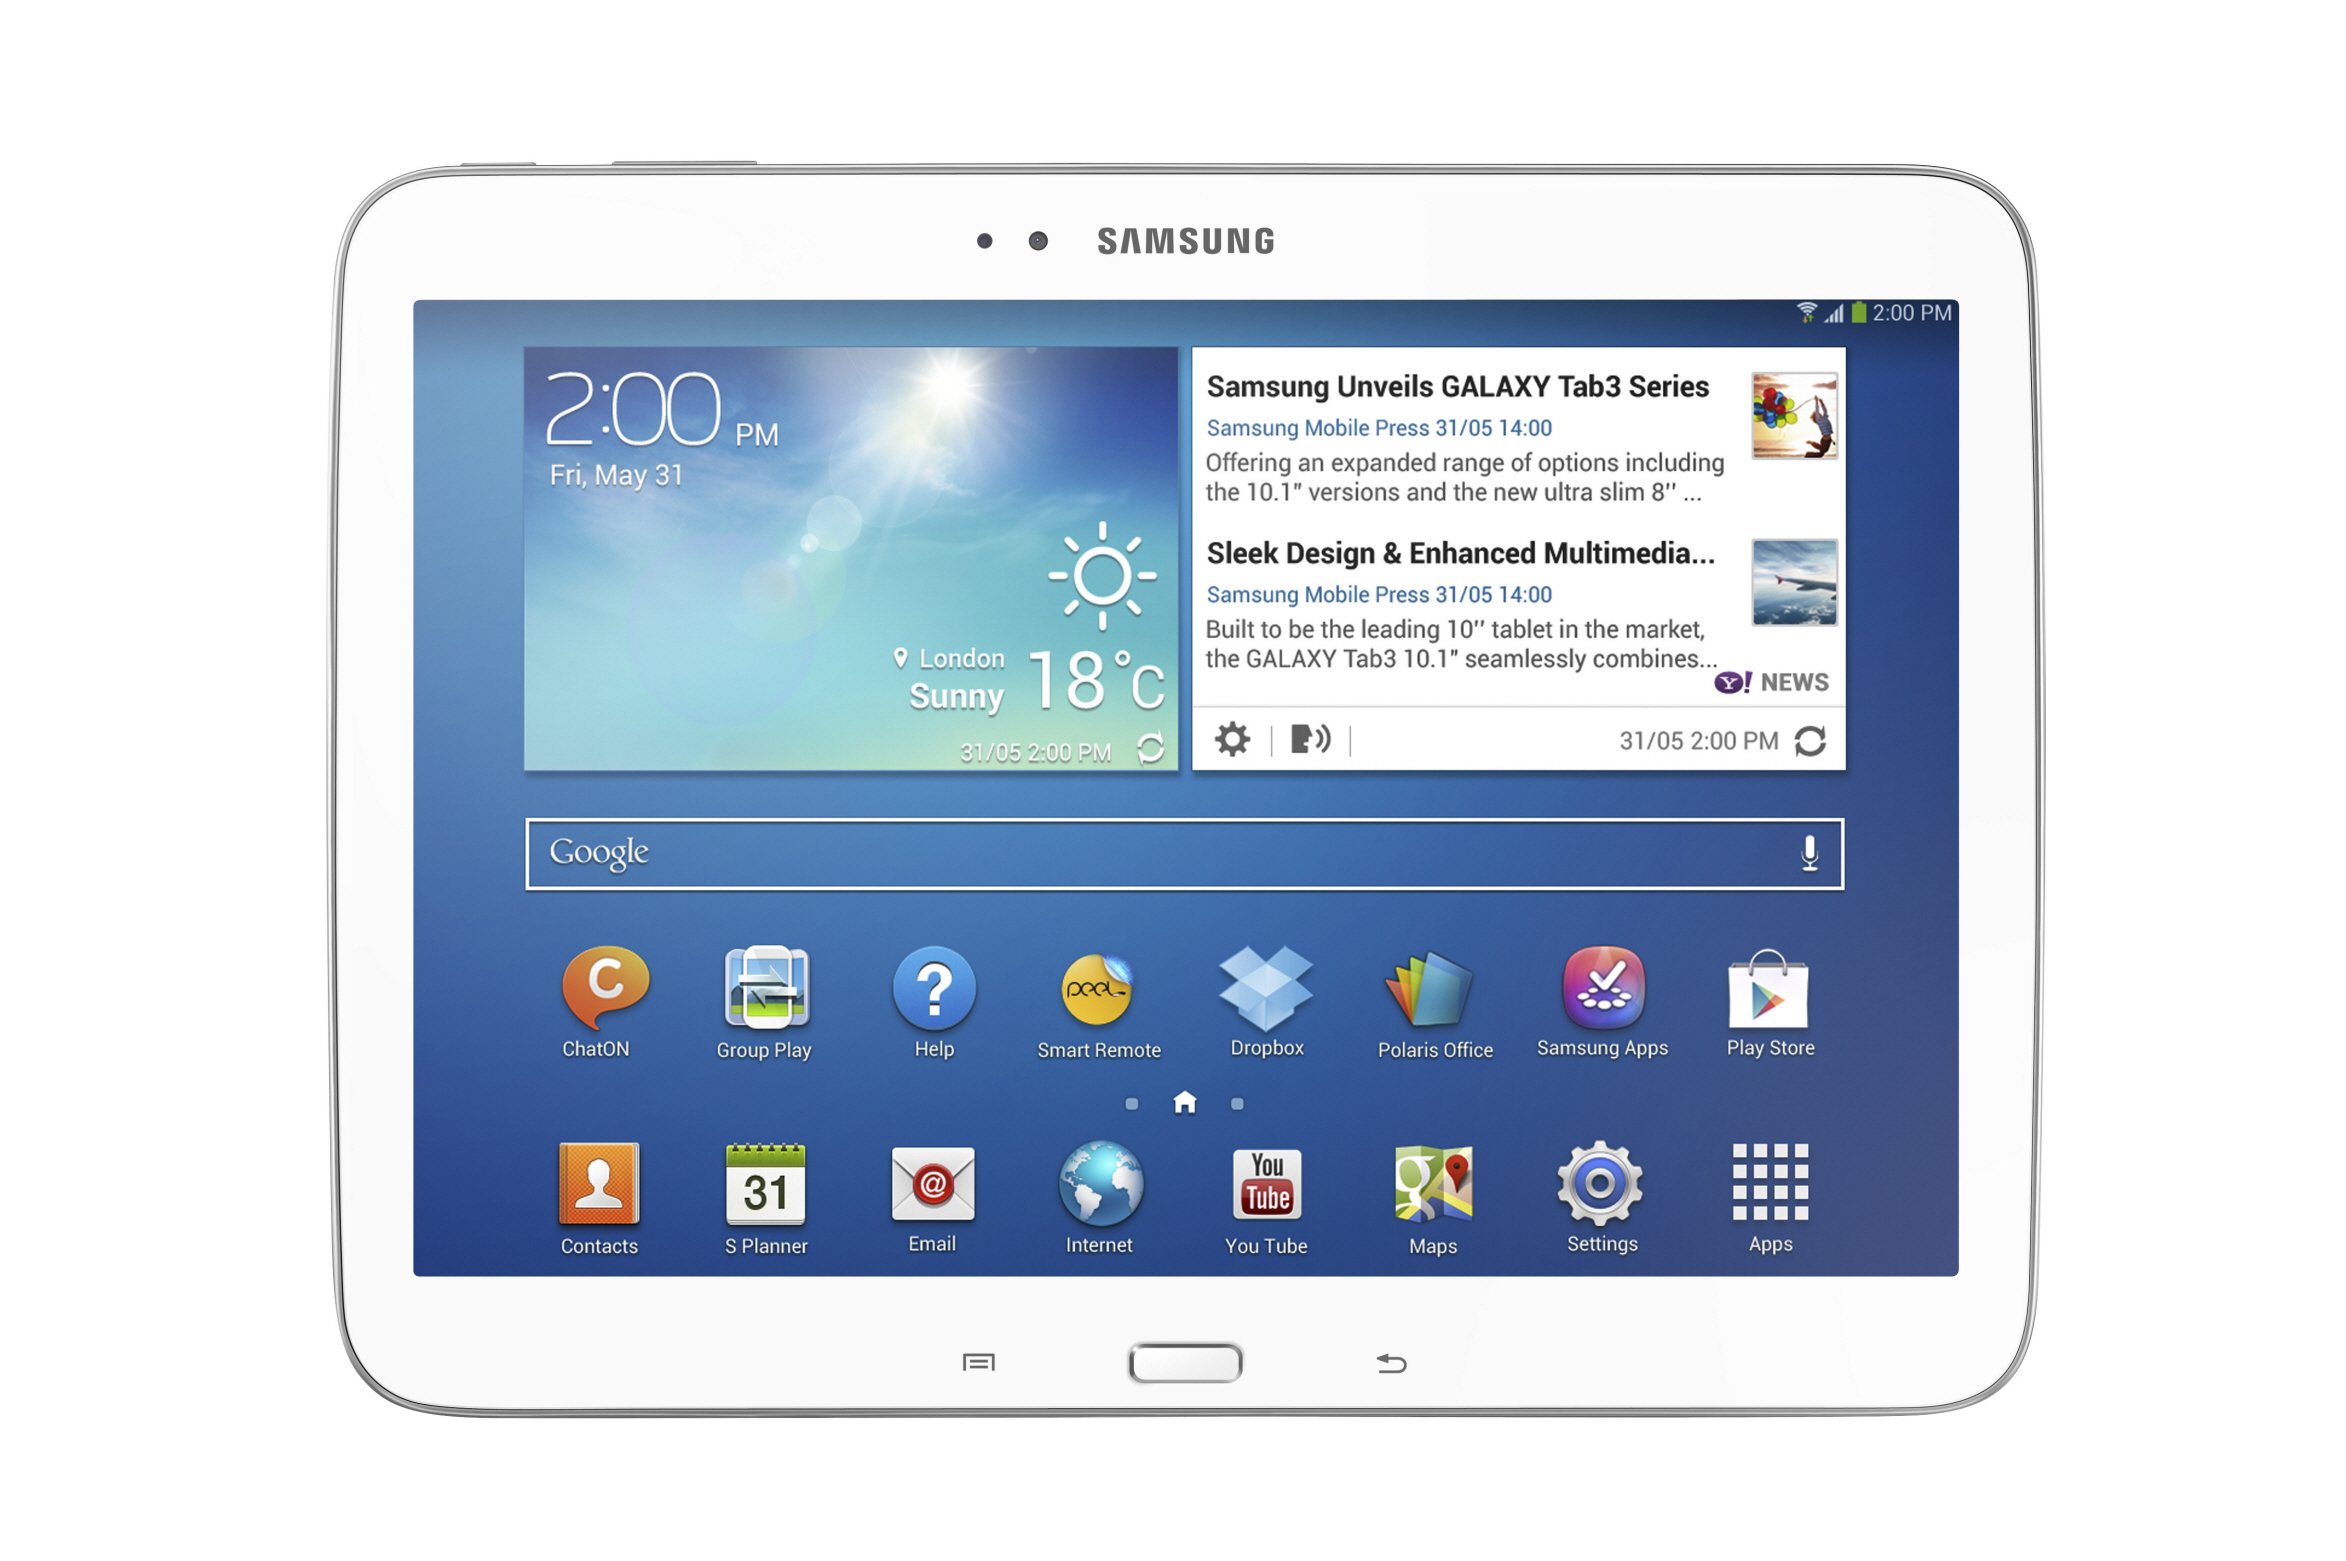 Samsung introduces new Galaxy Tab 3 Series - SamMobile